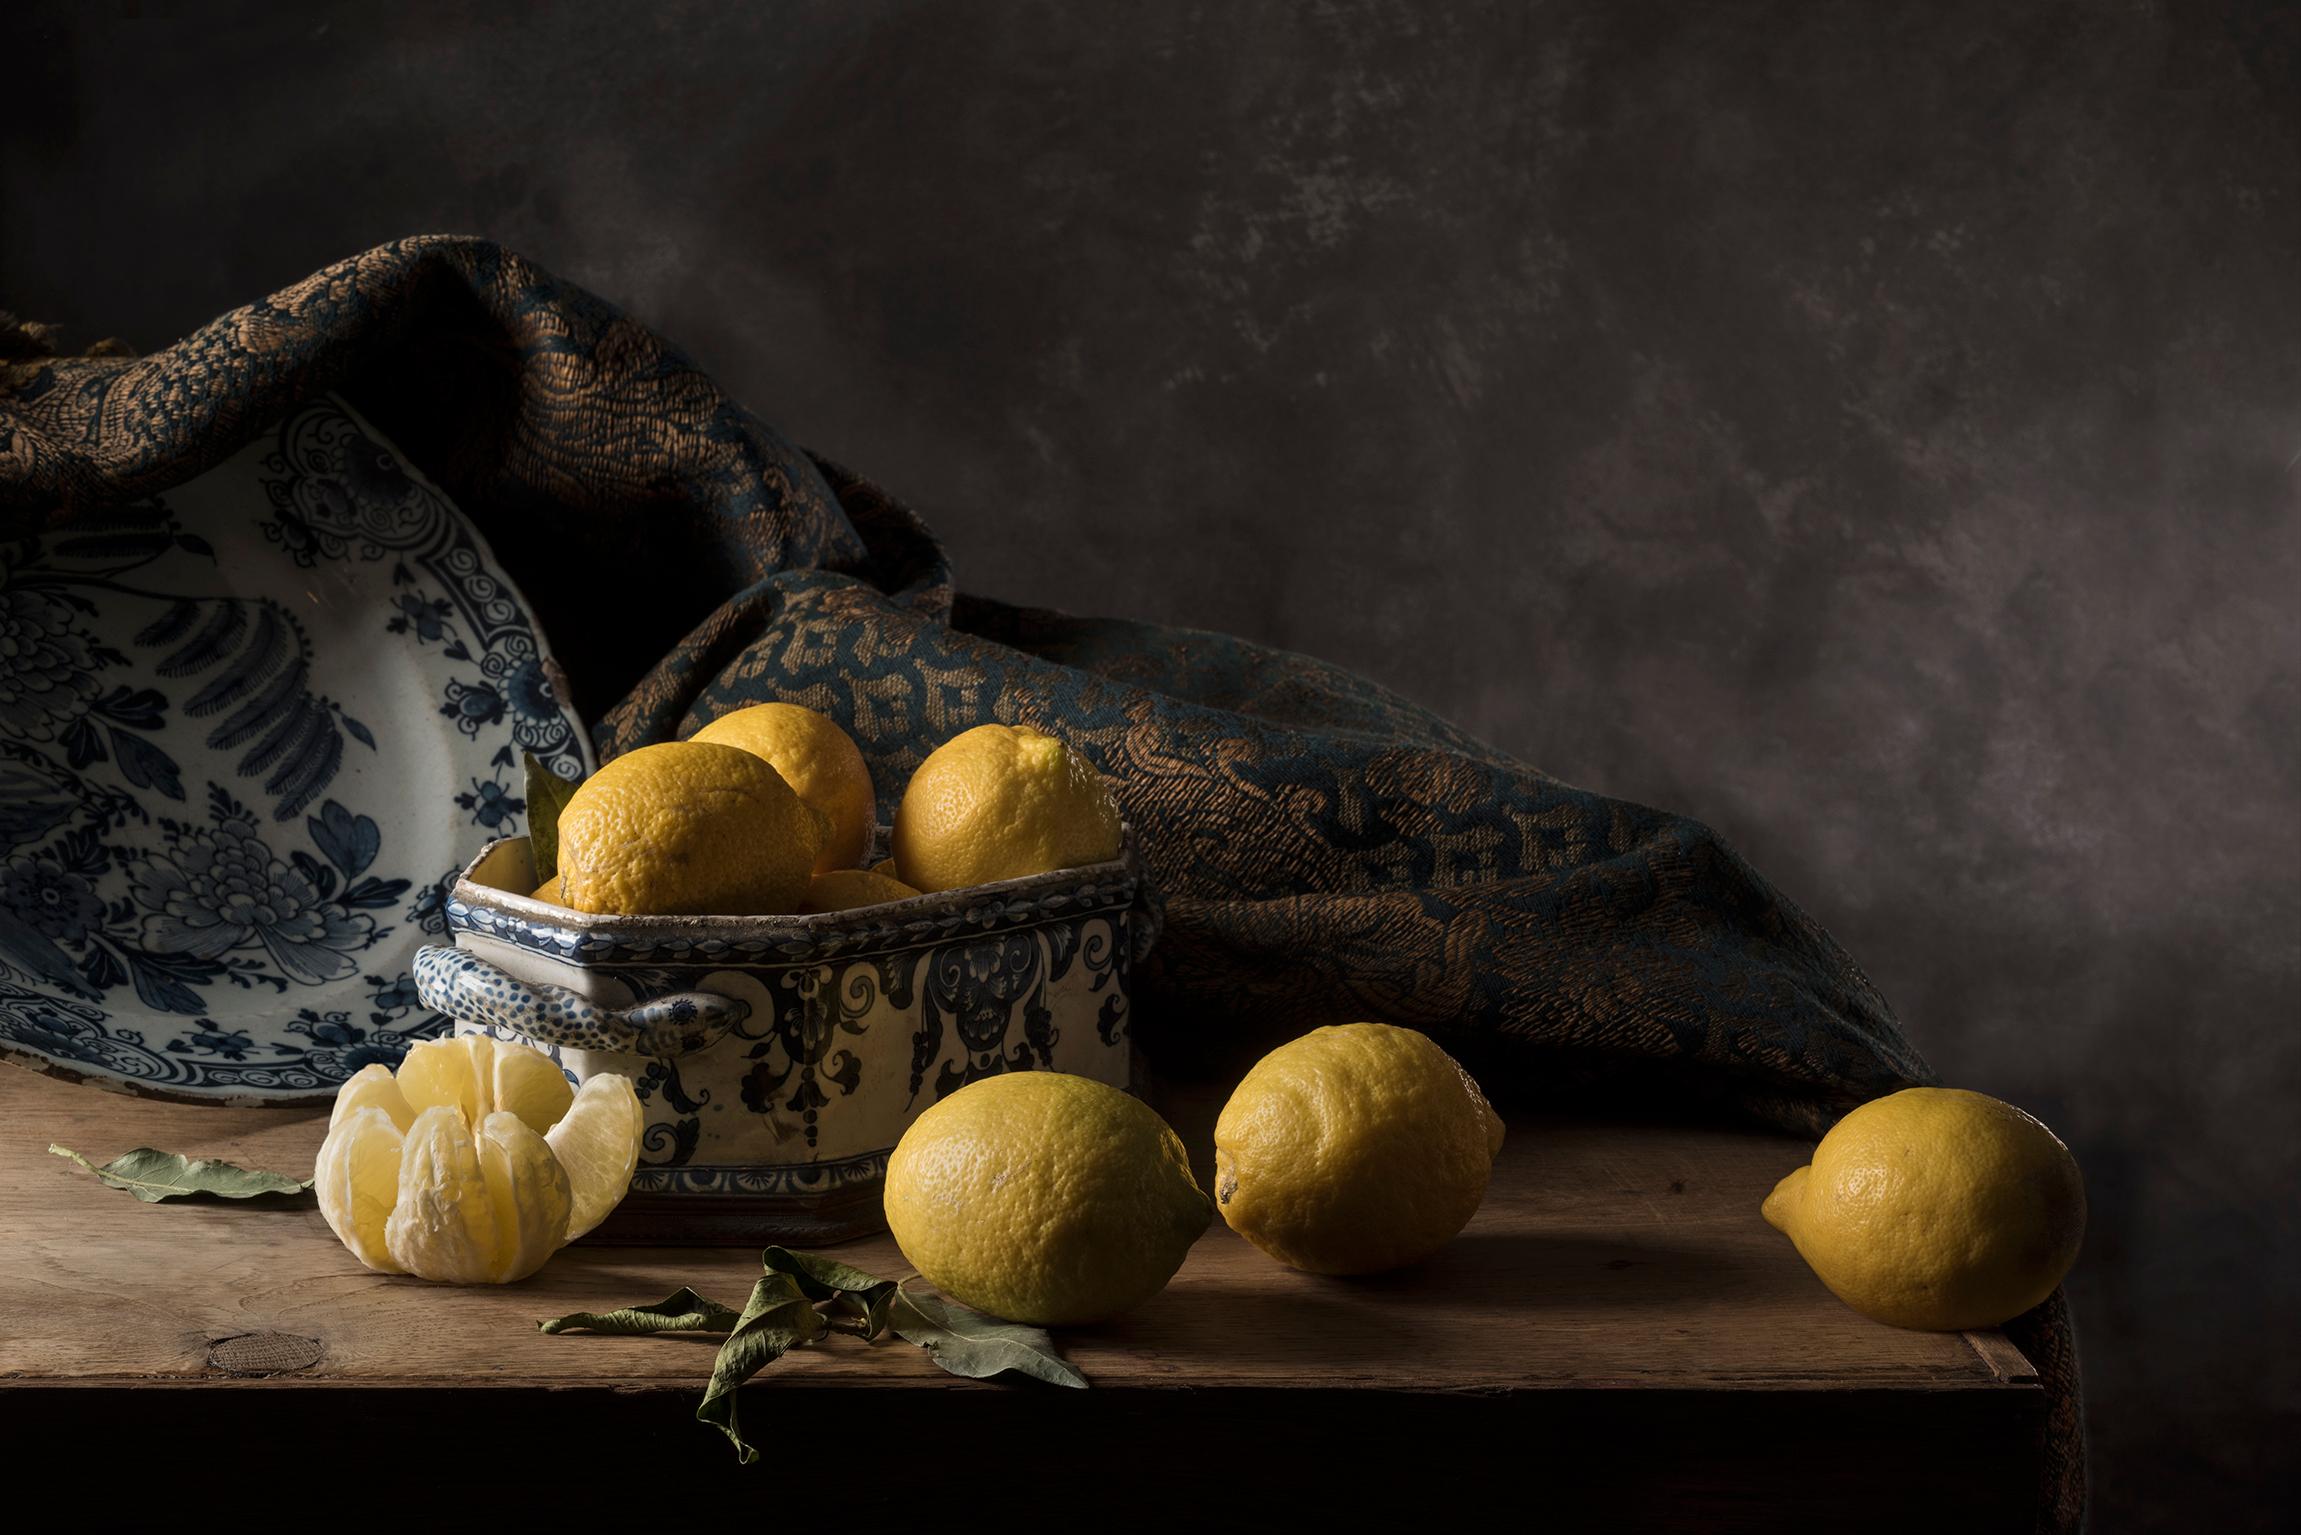 Les Citrons 2 by Carol Descordes, Framed Lemon Food Still Life Photograph